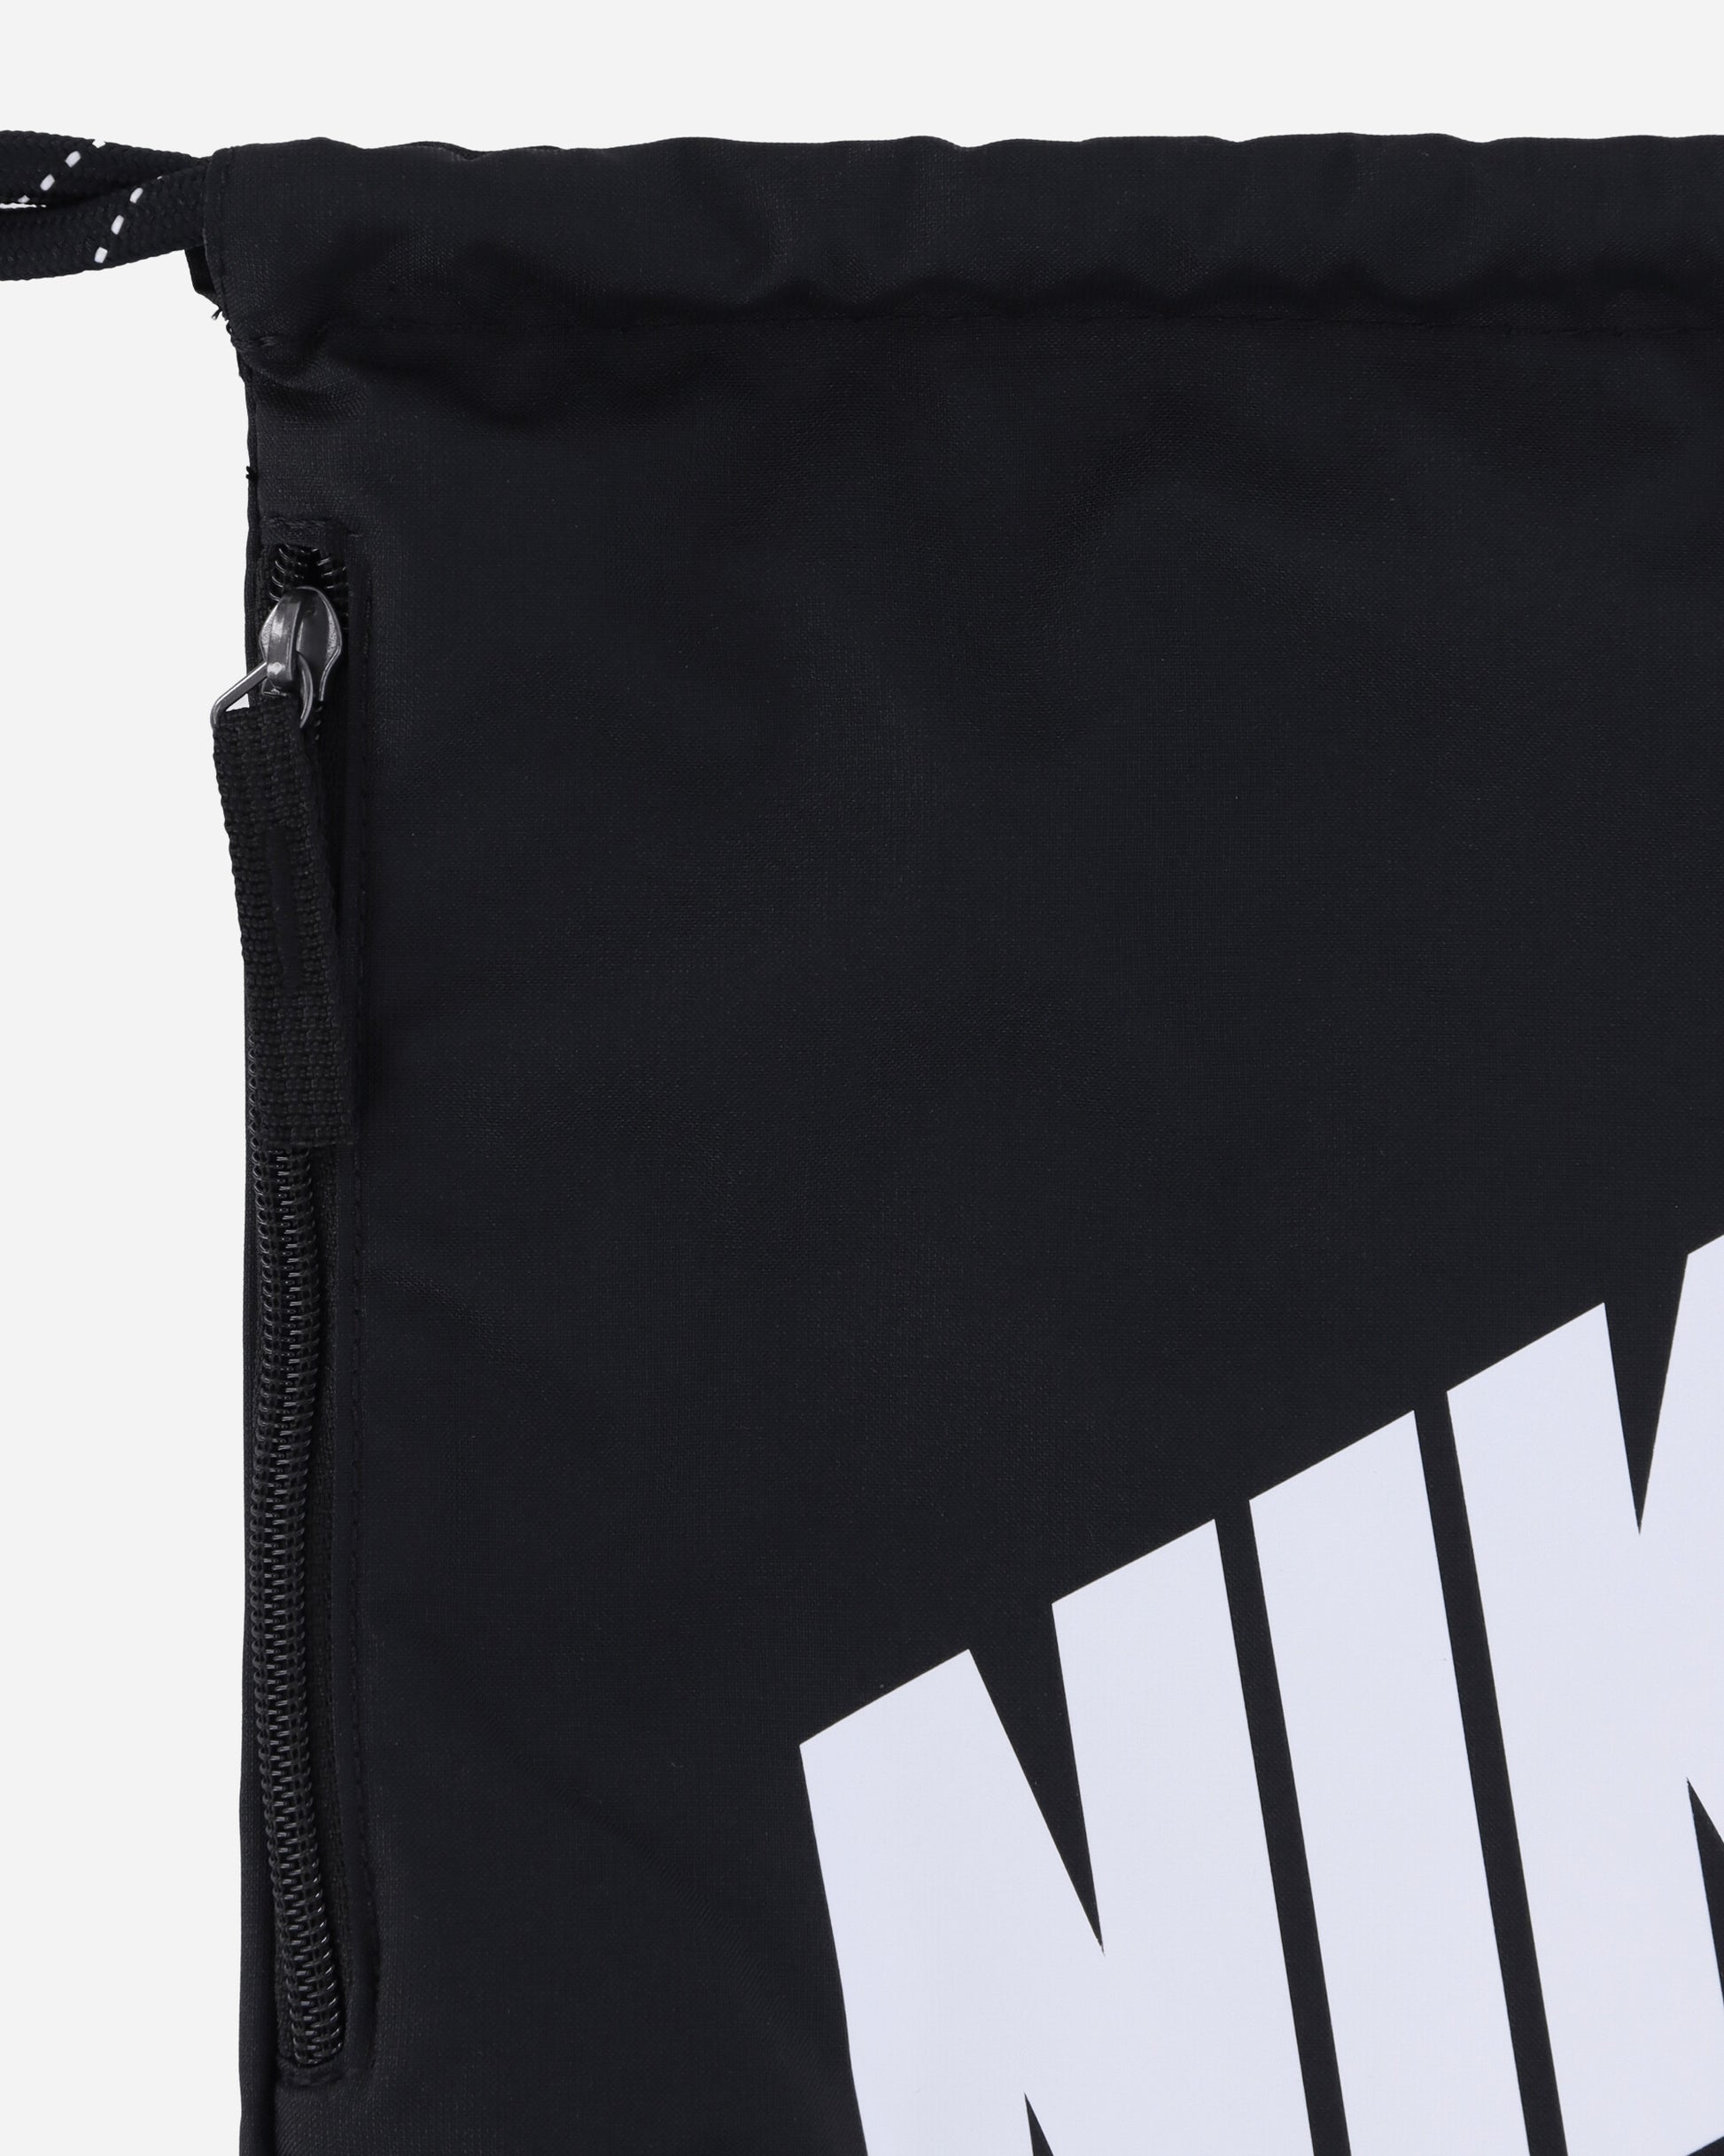 Nike Nk Heritage Drawstring Black/Black Bags and Backpacks Shoulder Bags DC4245-010